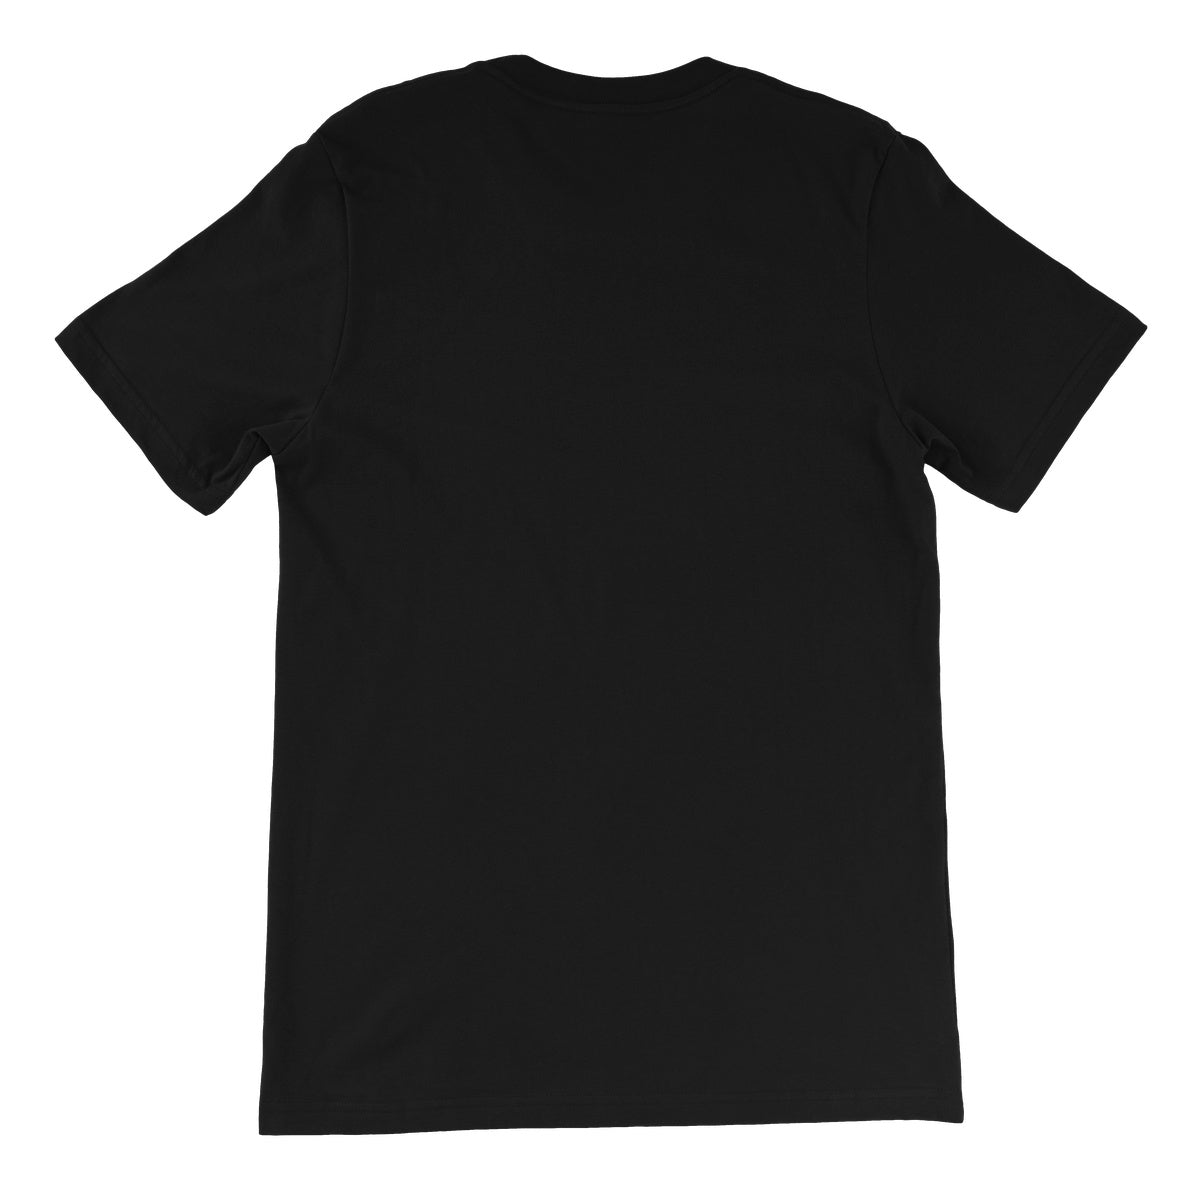 Karl Anderson Machine Gun Club Unisex Short Sleeve T-Shirt